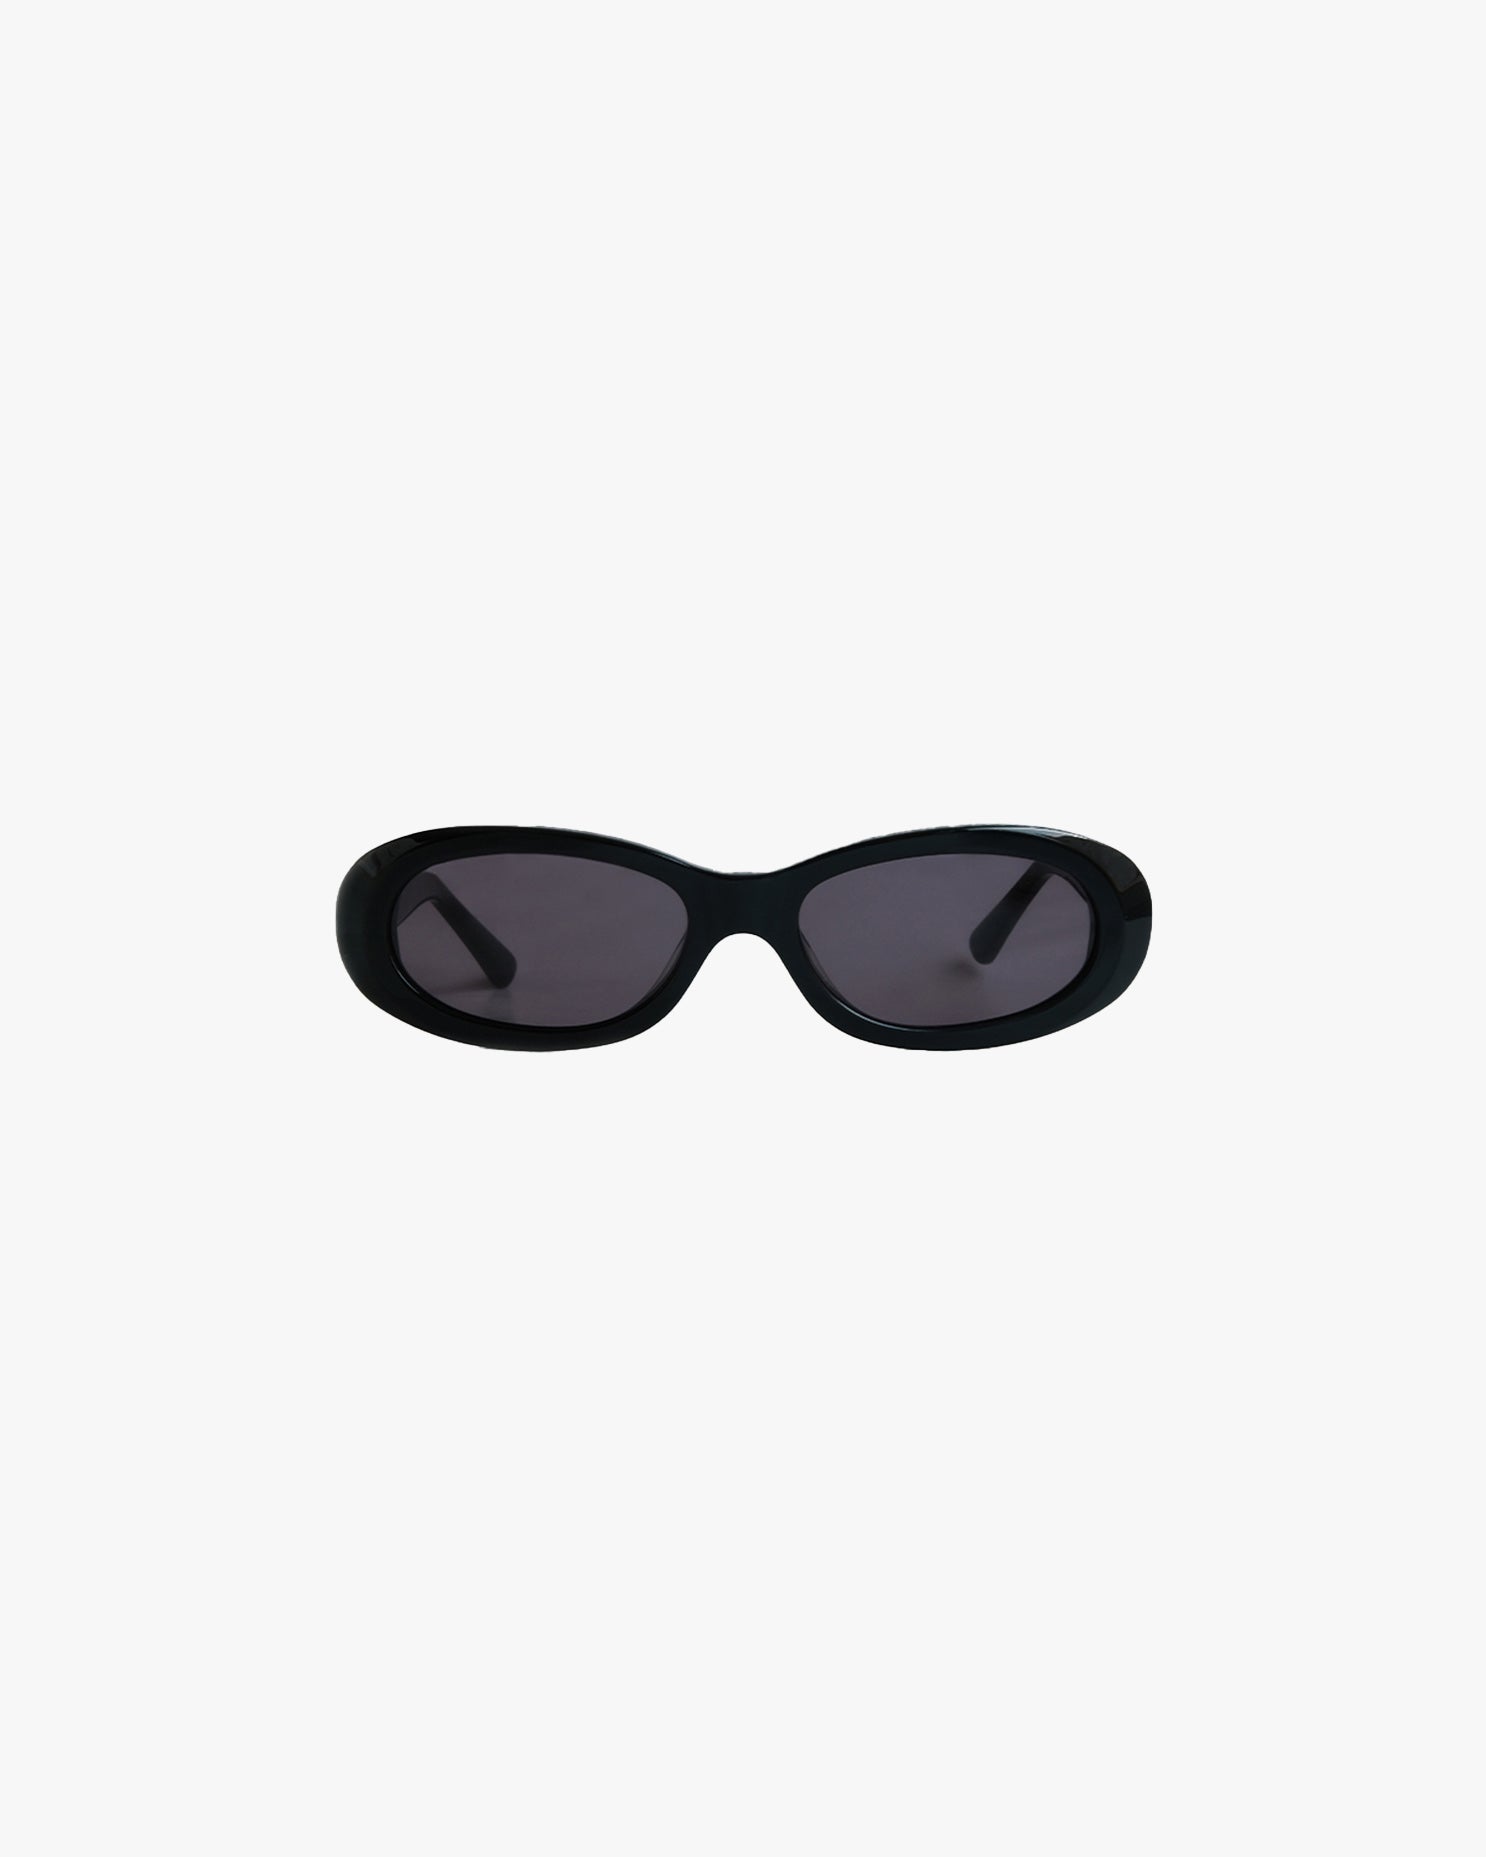 Louis Sunglasses in Black